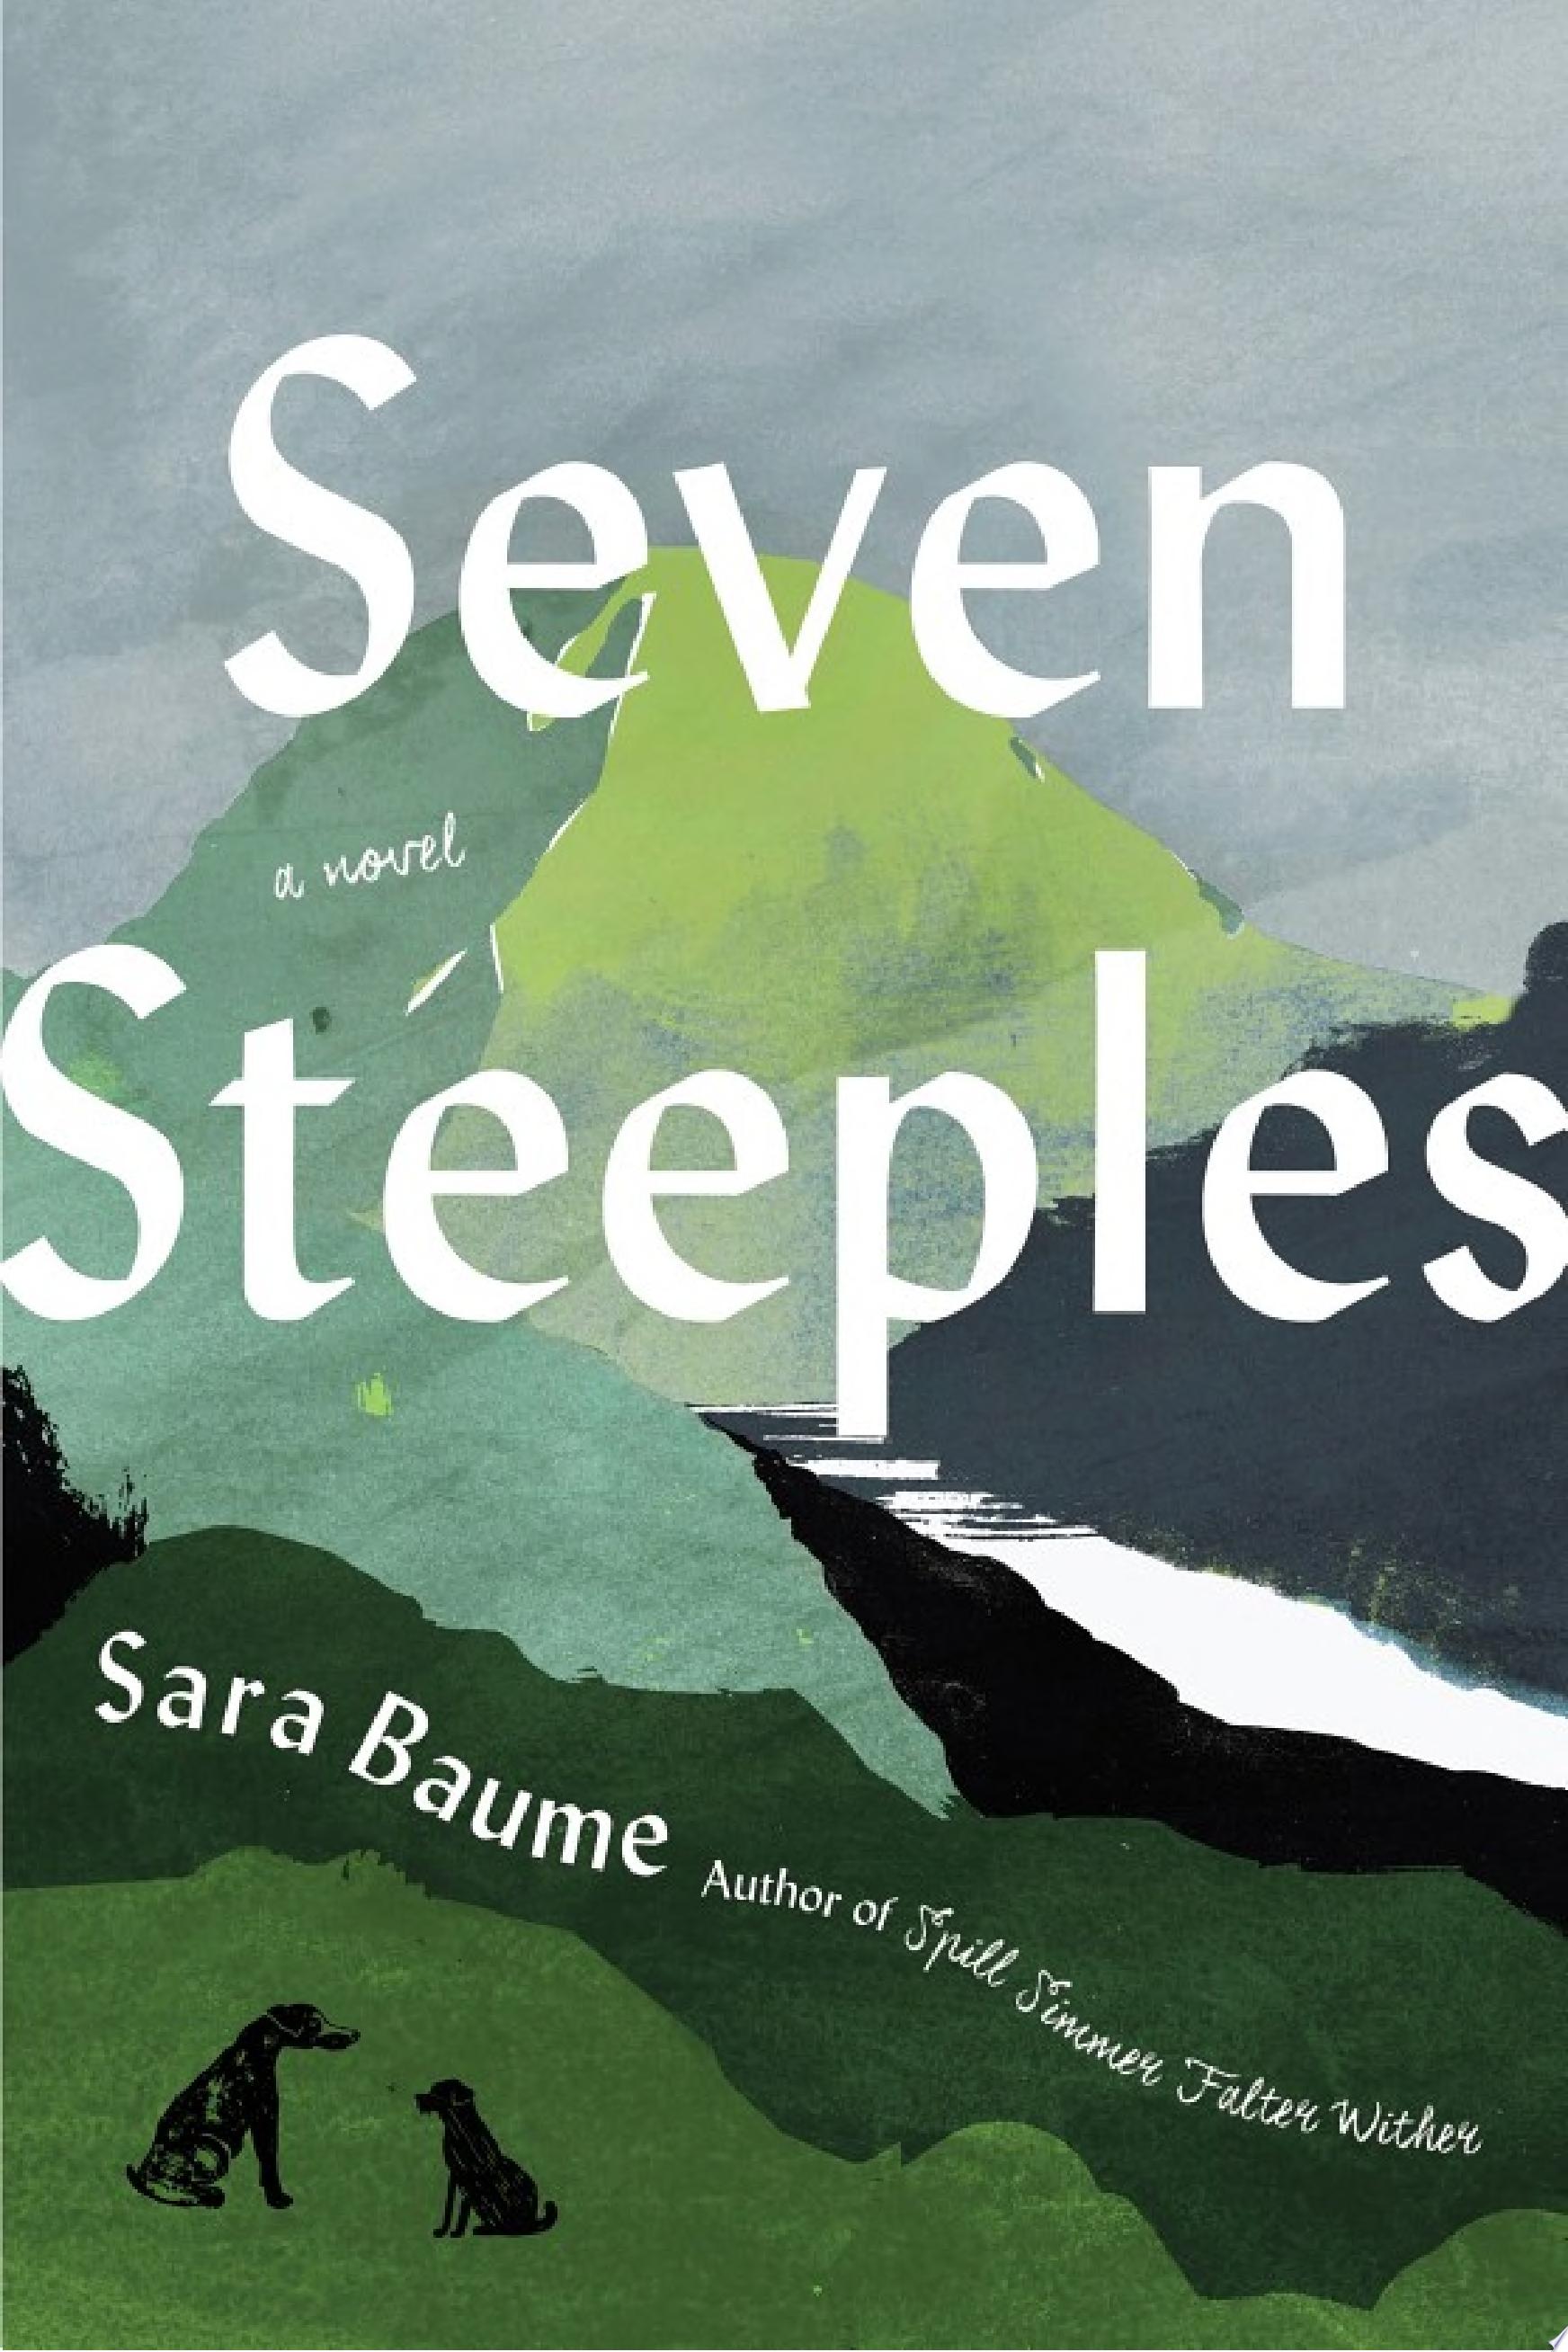 Image for "Seven Steeples"